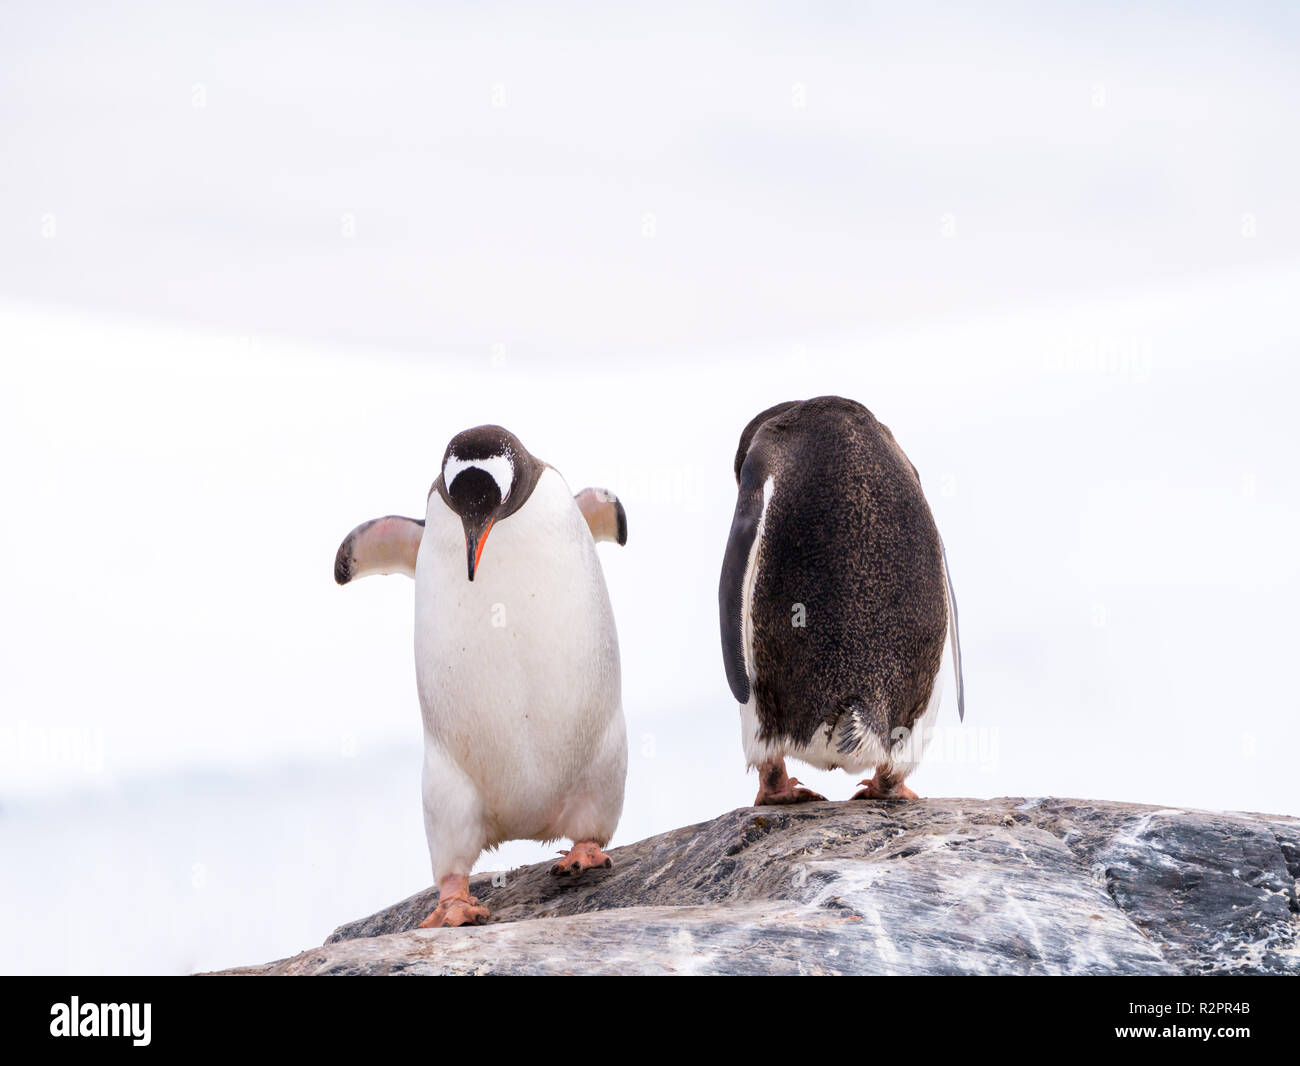 Pair of Gentoo penguins, Pygoscelis papua, standing on rock, Mikkelsen Harbour, Trinity Island, Antarctic Peninsula, Antarctica Stock Photo